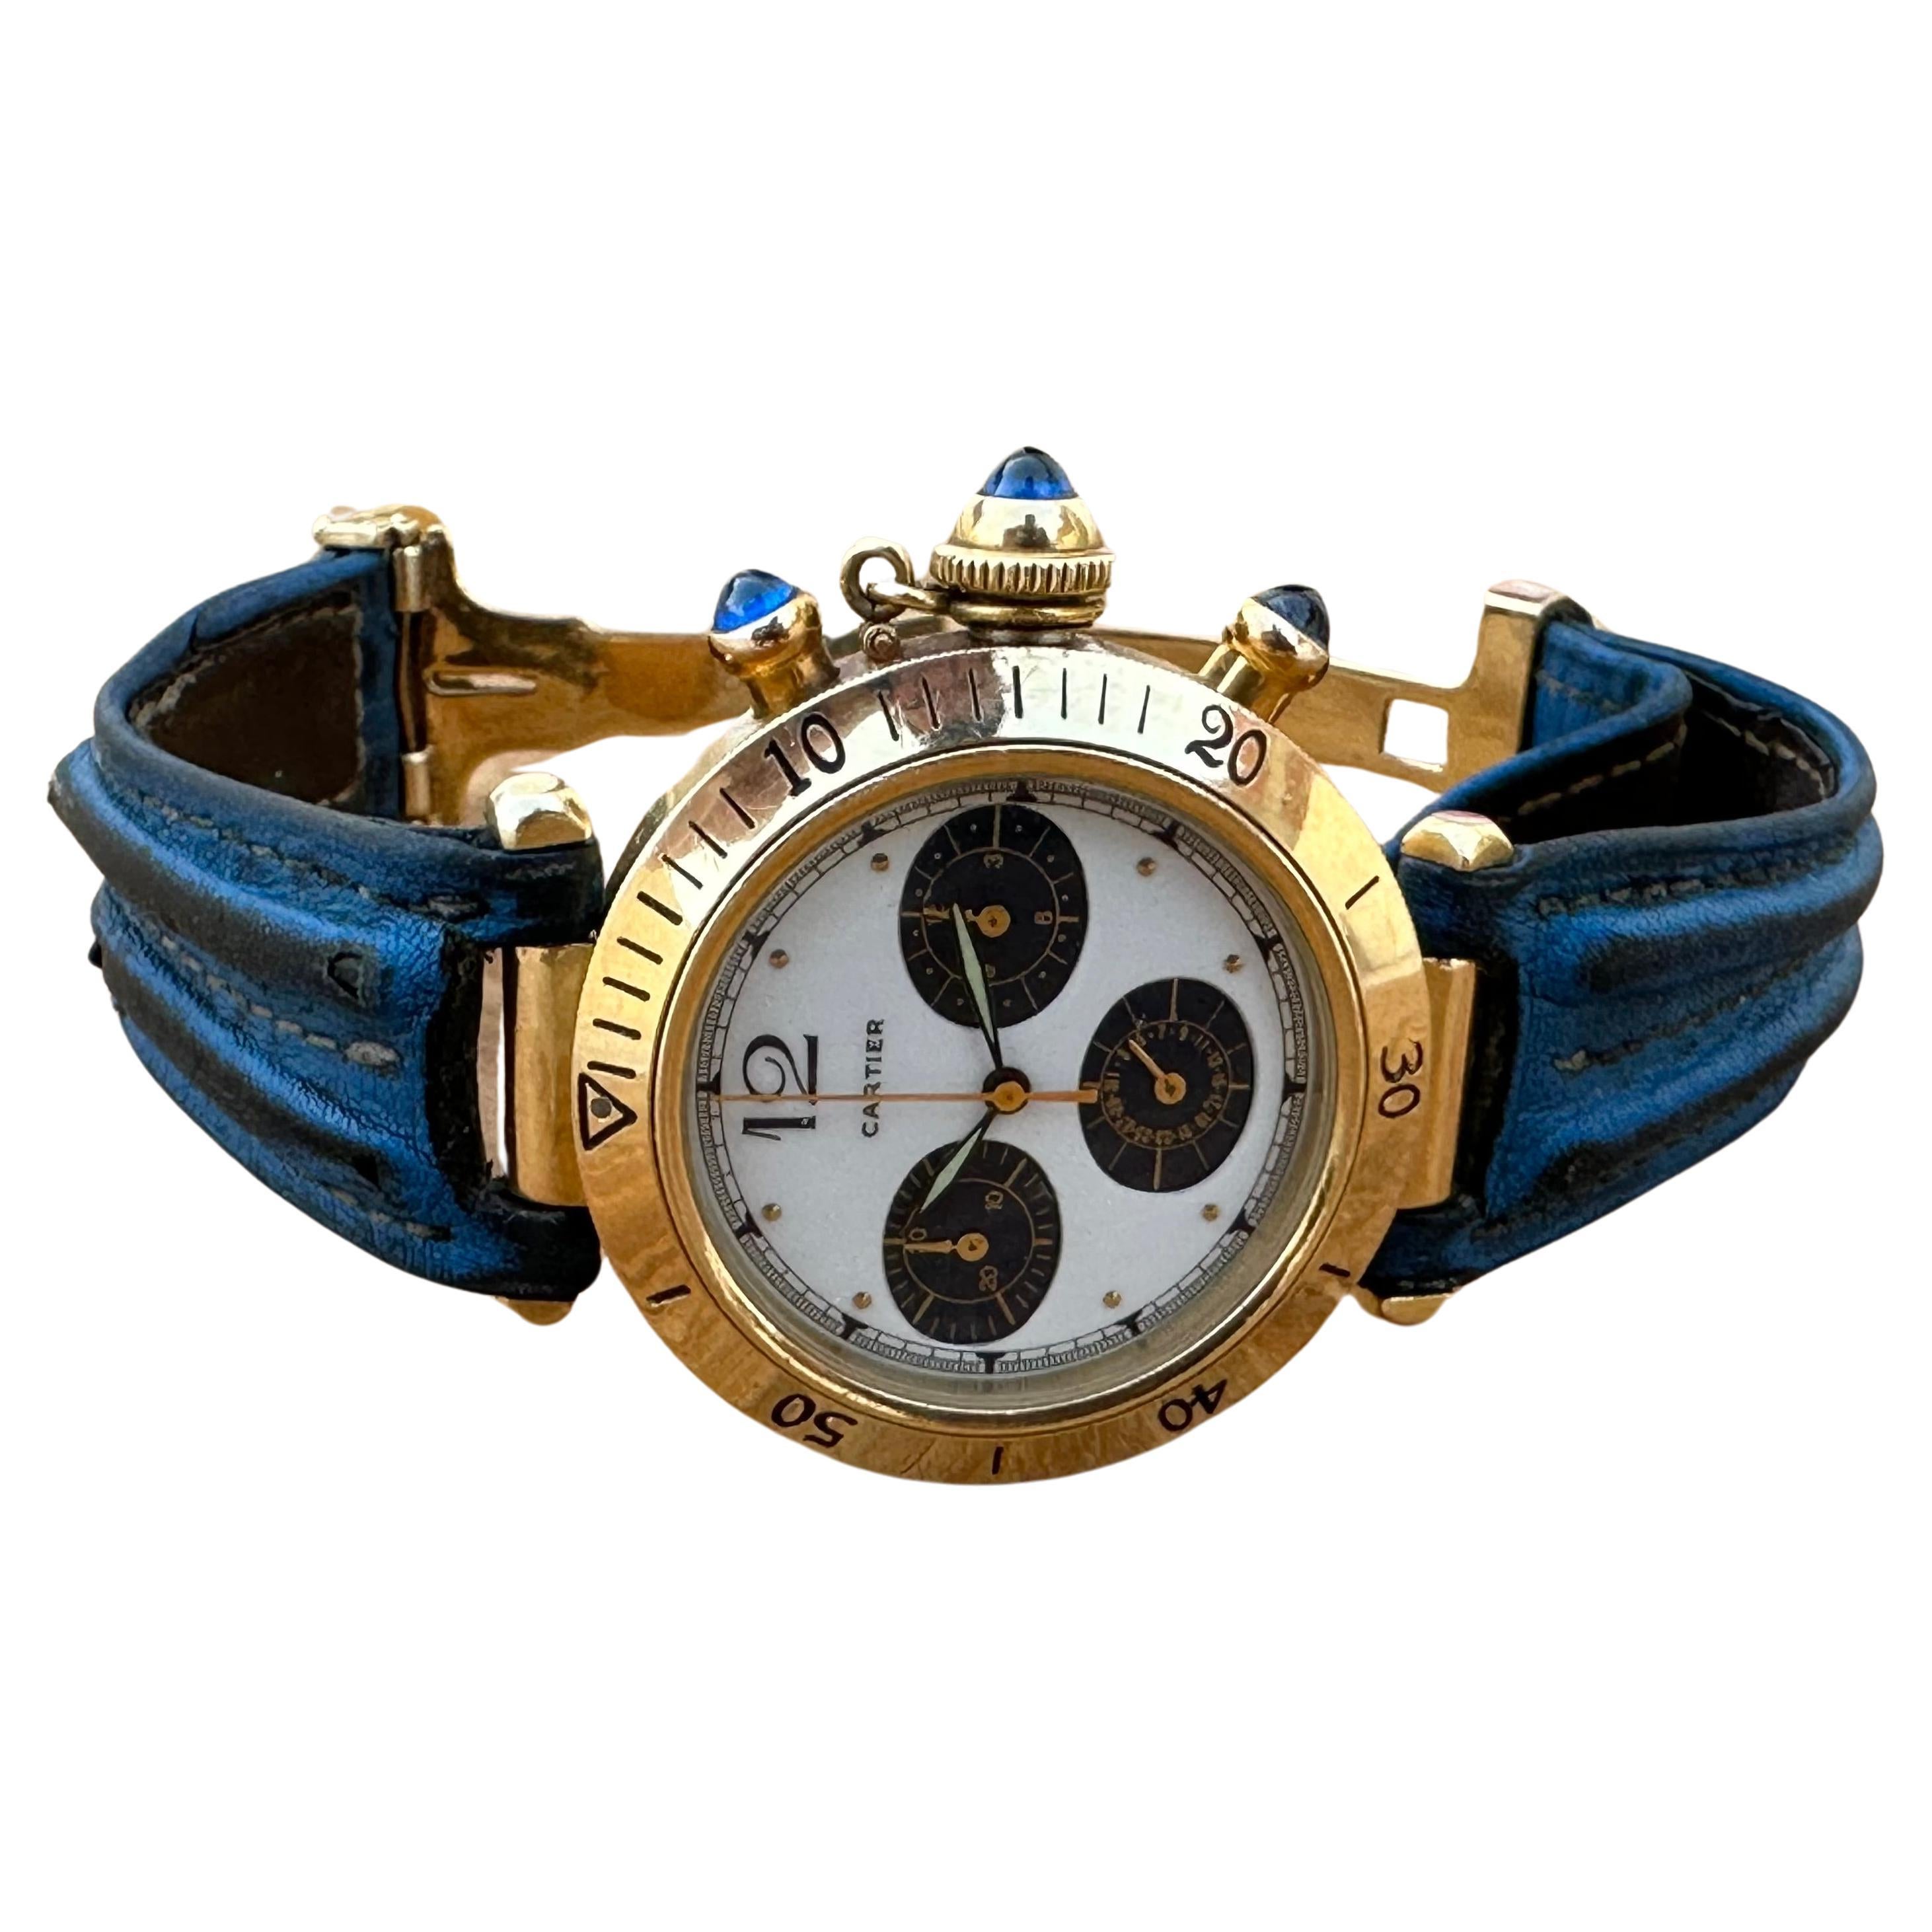 VTG Fred Paris Stainless Steel & Gold Swiss Quartz Watch with Original Box